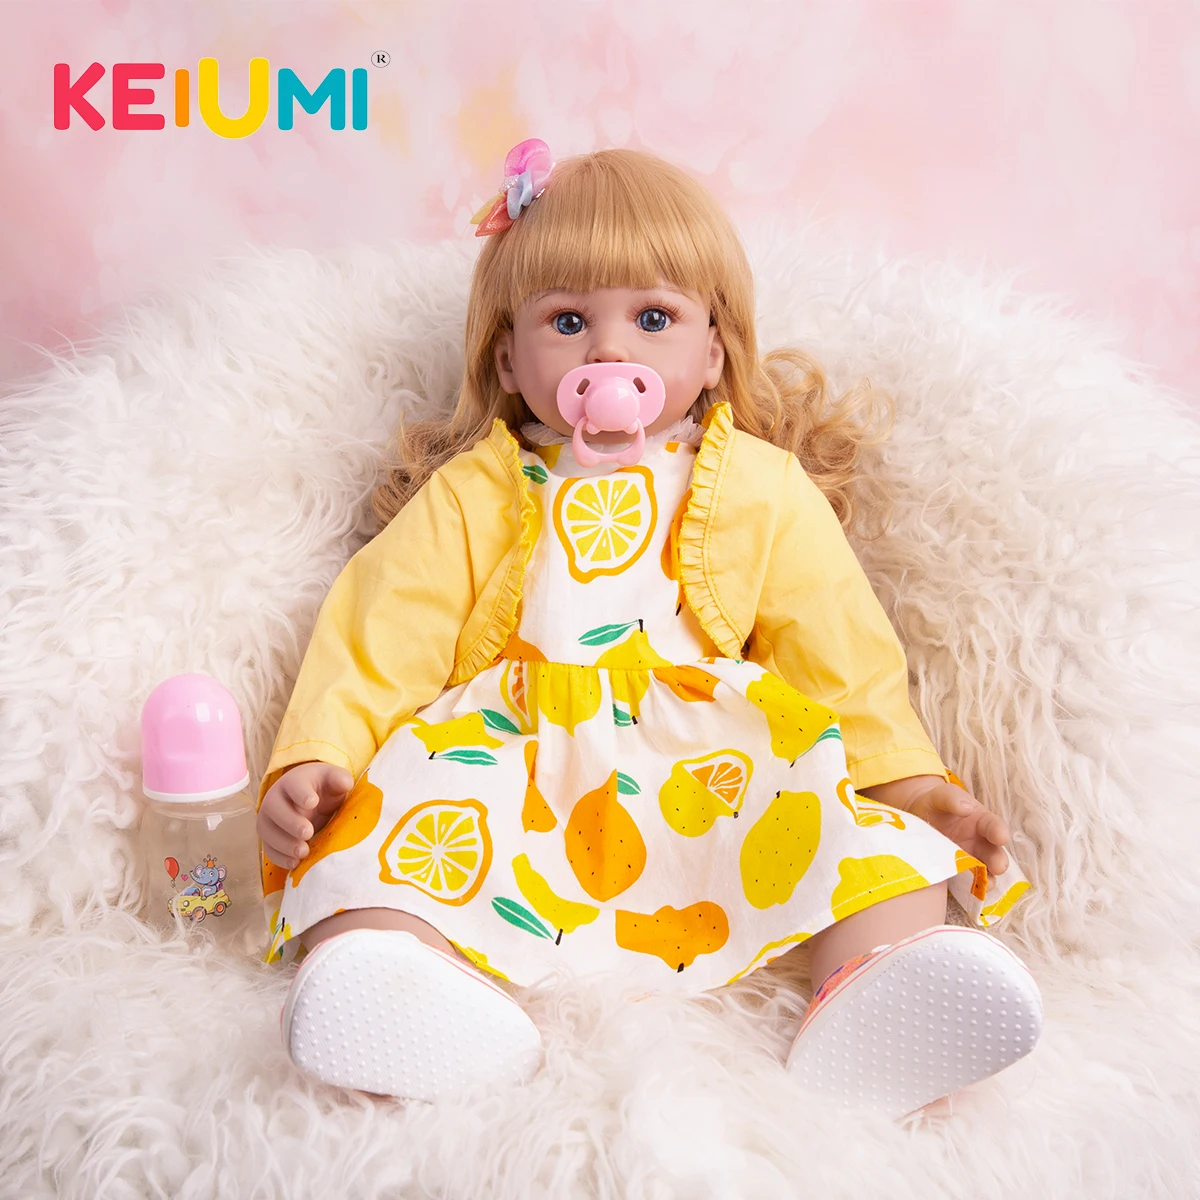 

KEIUMI 60CM Pretty Blond Hair Doll Reborn Lemon Yellow Gown Skirt Well Packaged Baby Girl For Birthday Gift